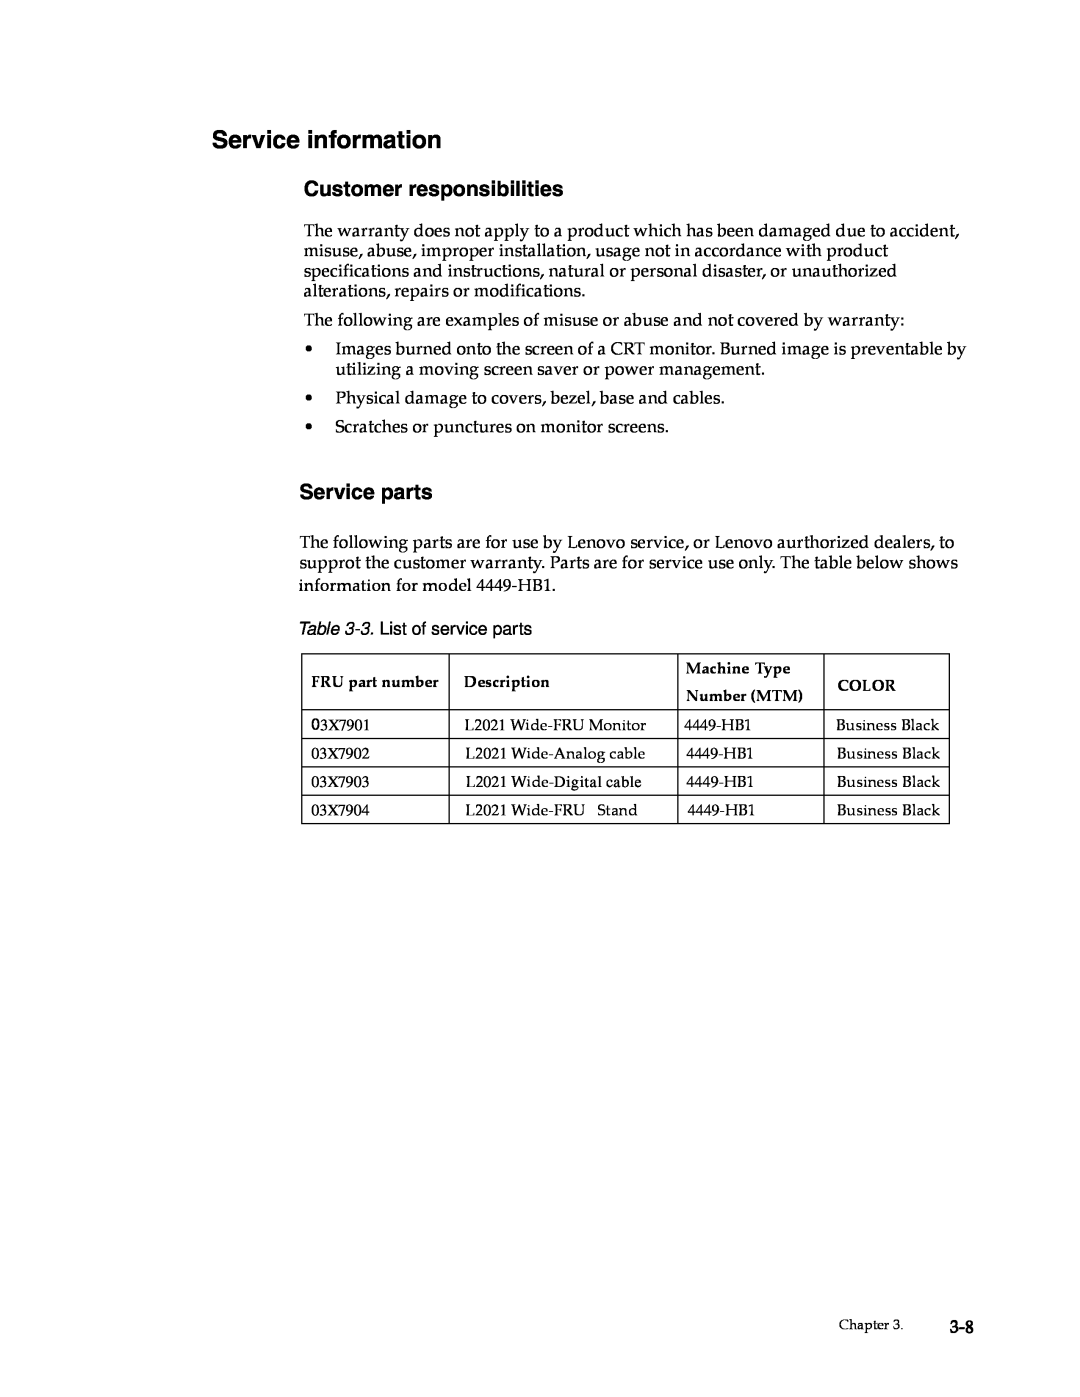 Lenovo L2021 manual Service information, Customer responsibilities, Service parts 